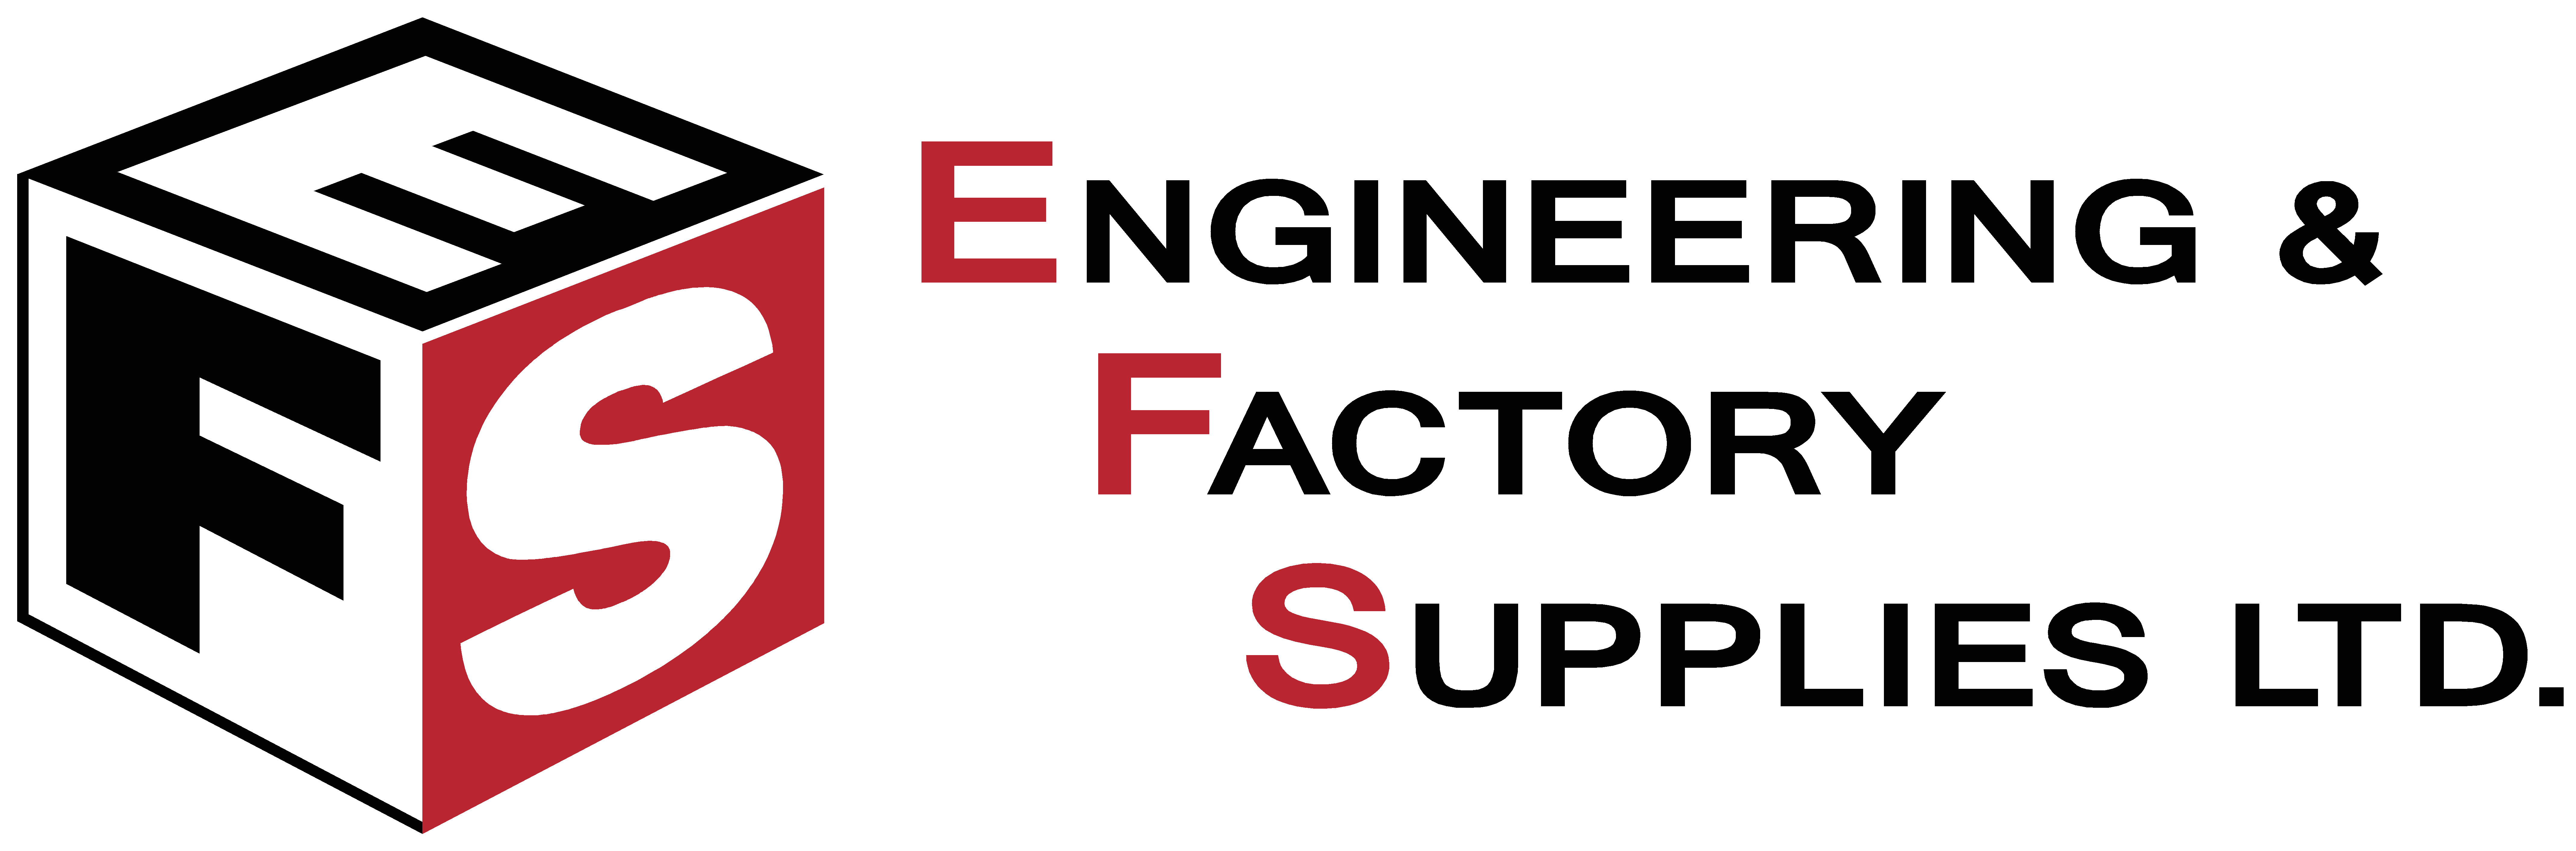 Engineering & Factory Supplies Ltd